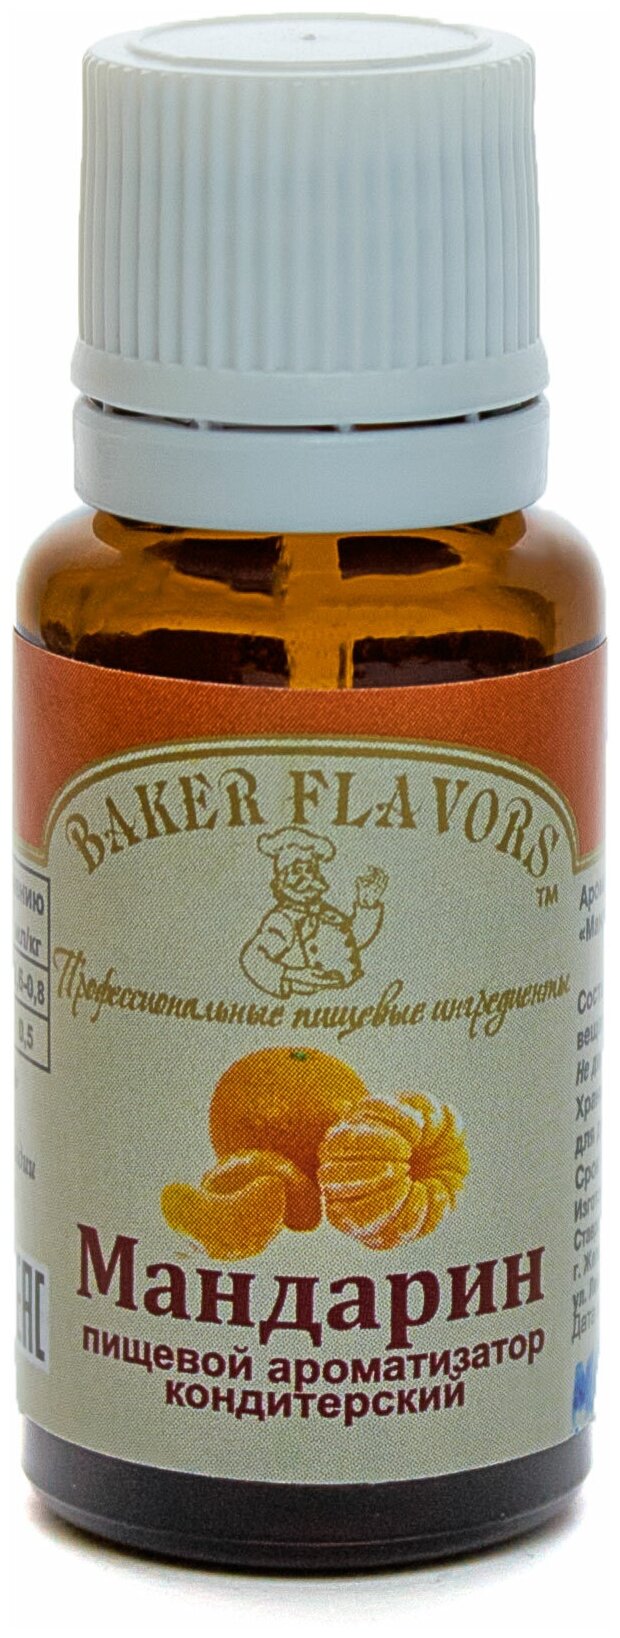 Baker Flavors ароматизатор пищевой Мандарин, 10 мл